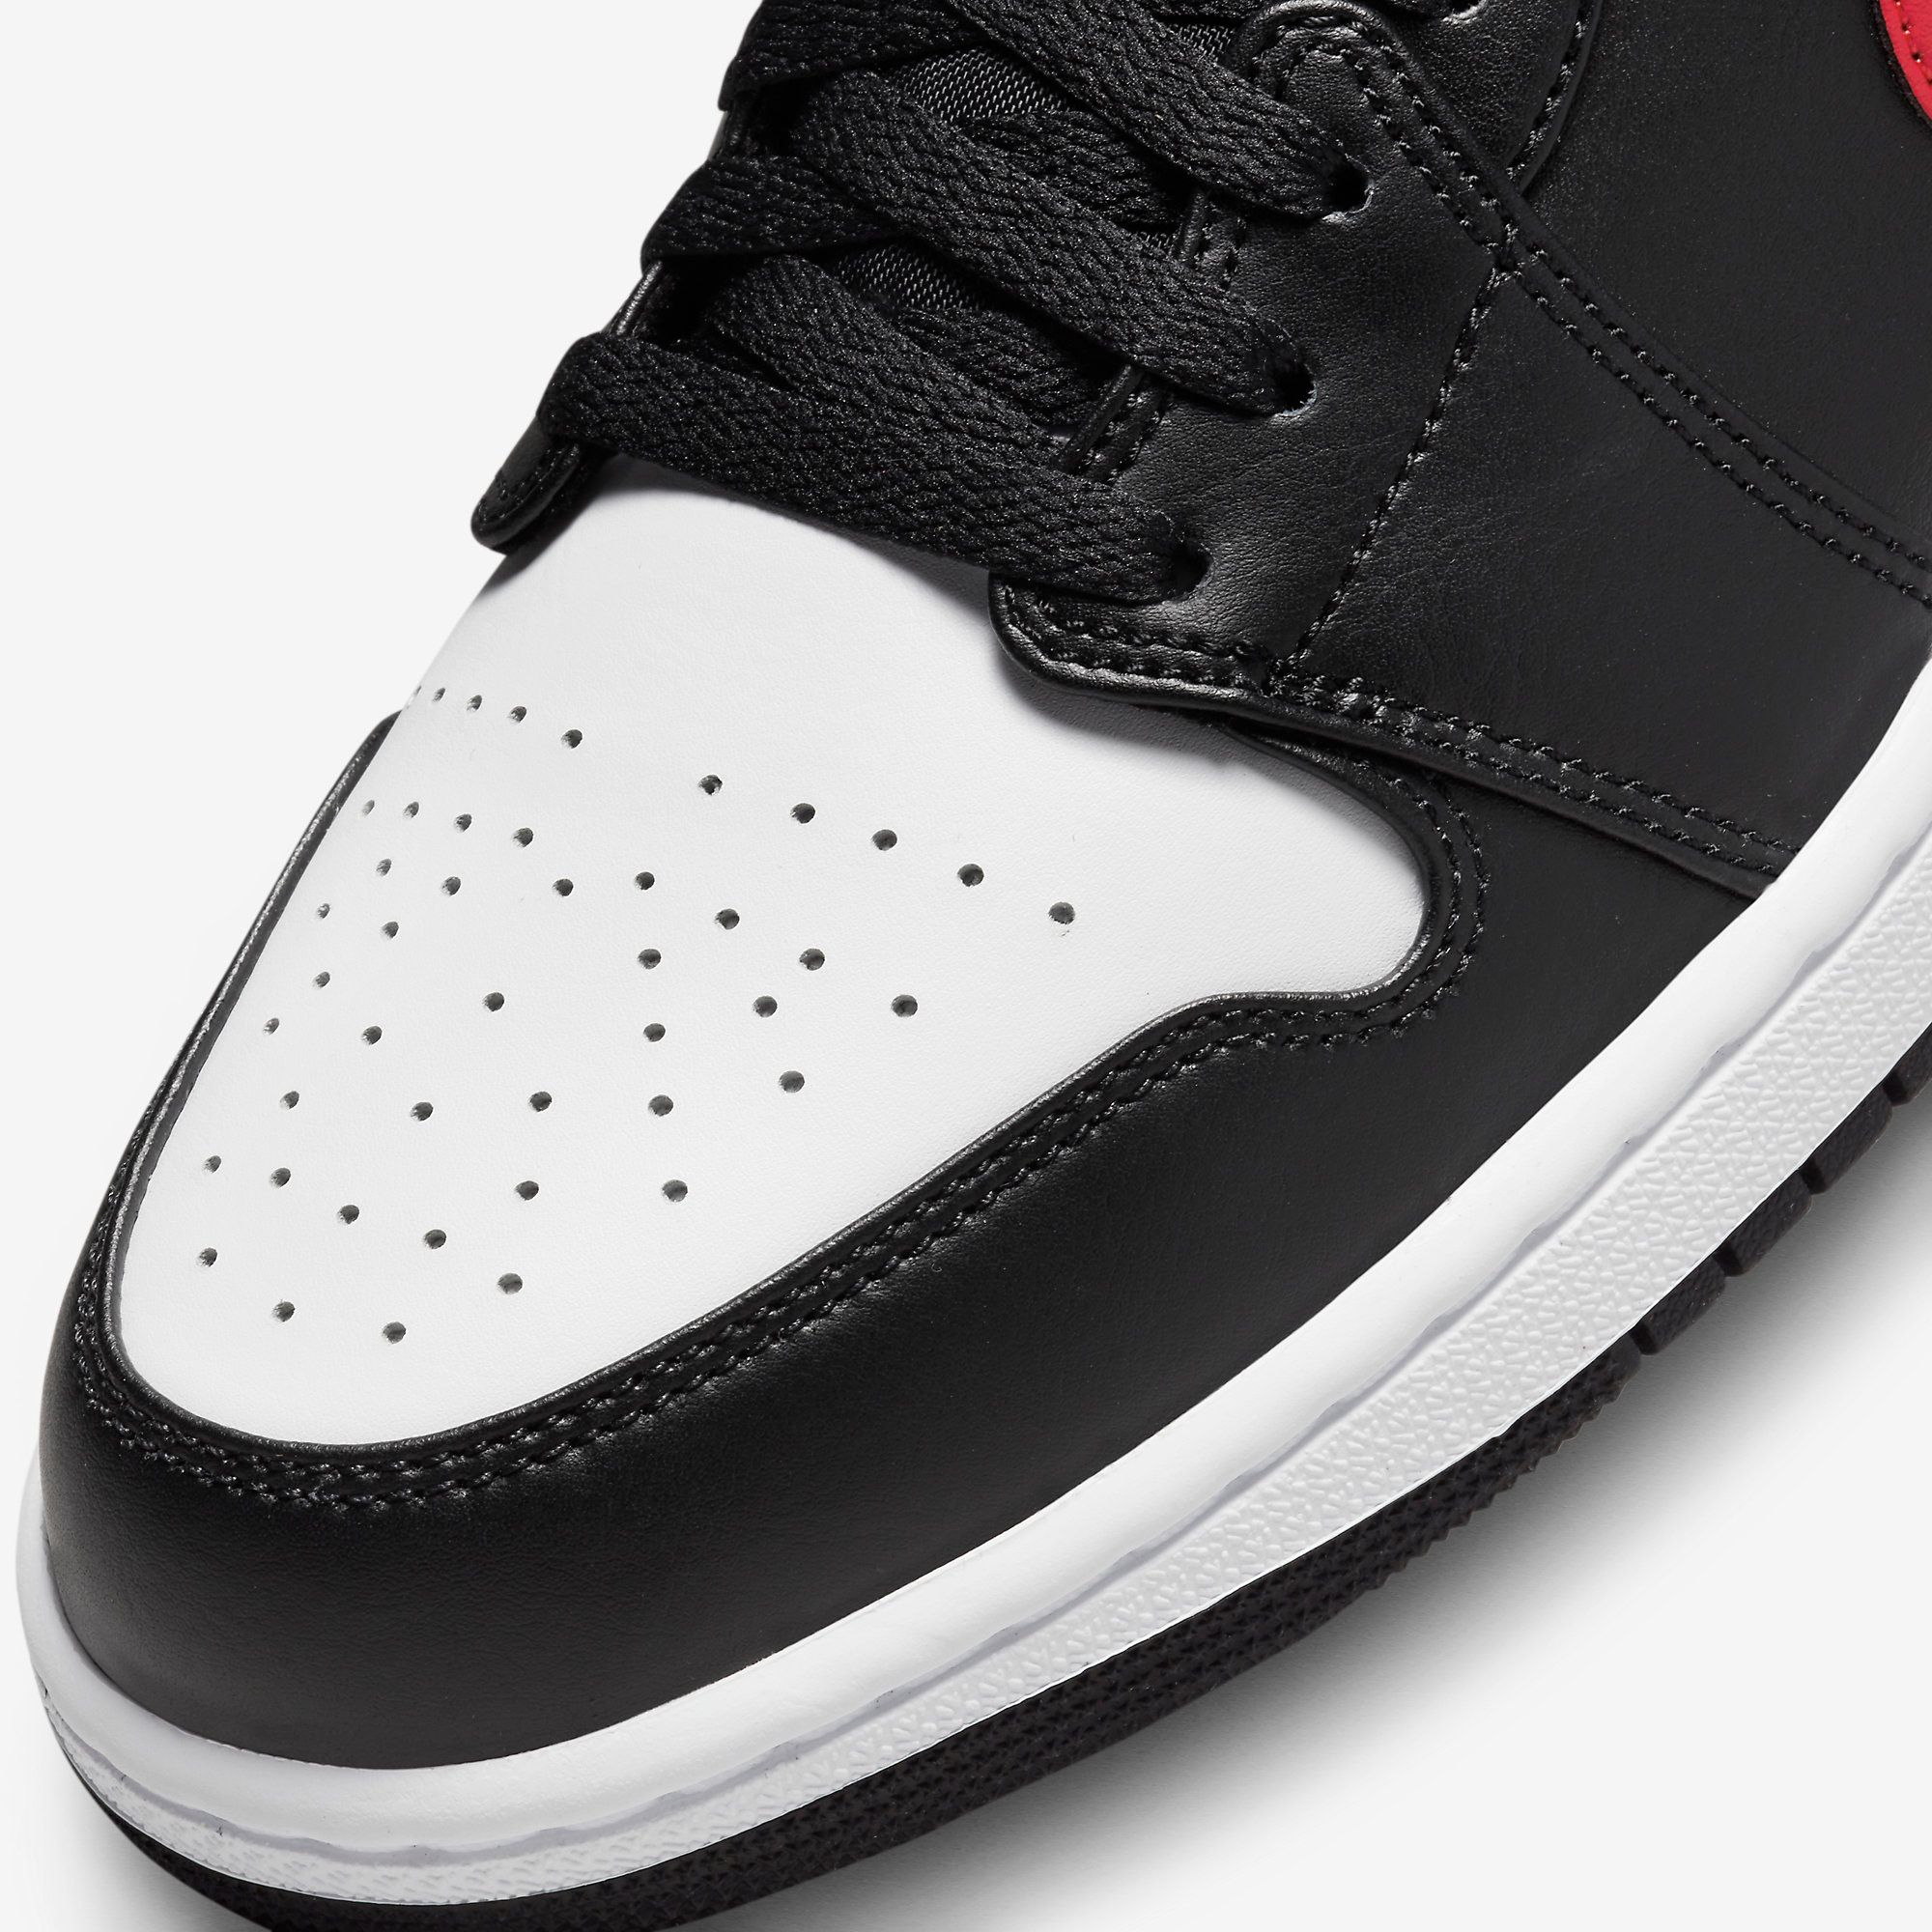  Air Jordan 1 Low - Black / White / Fire Red 